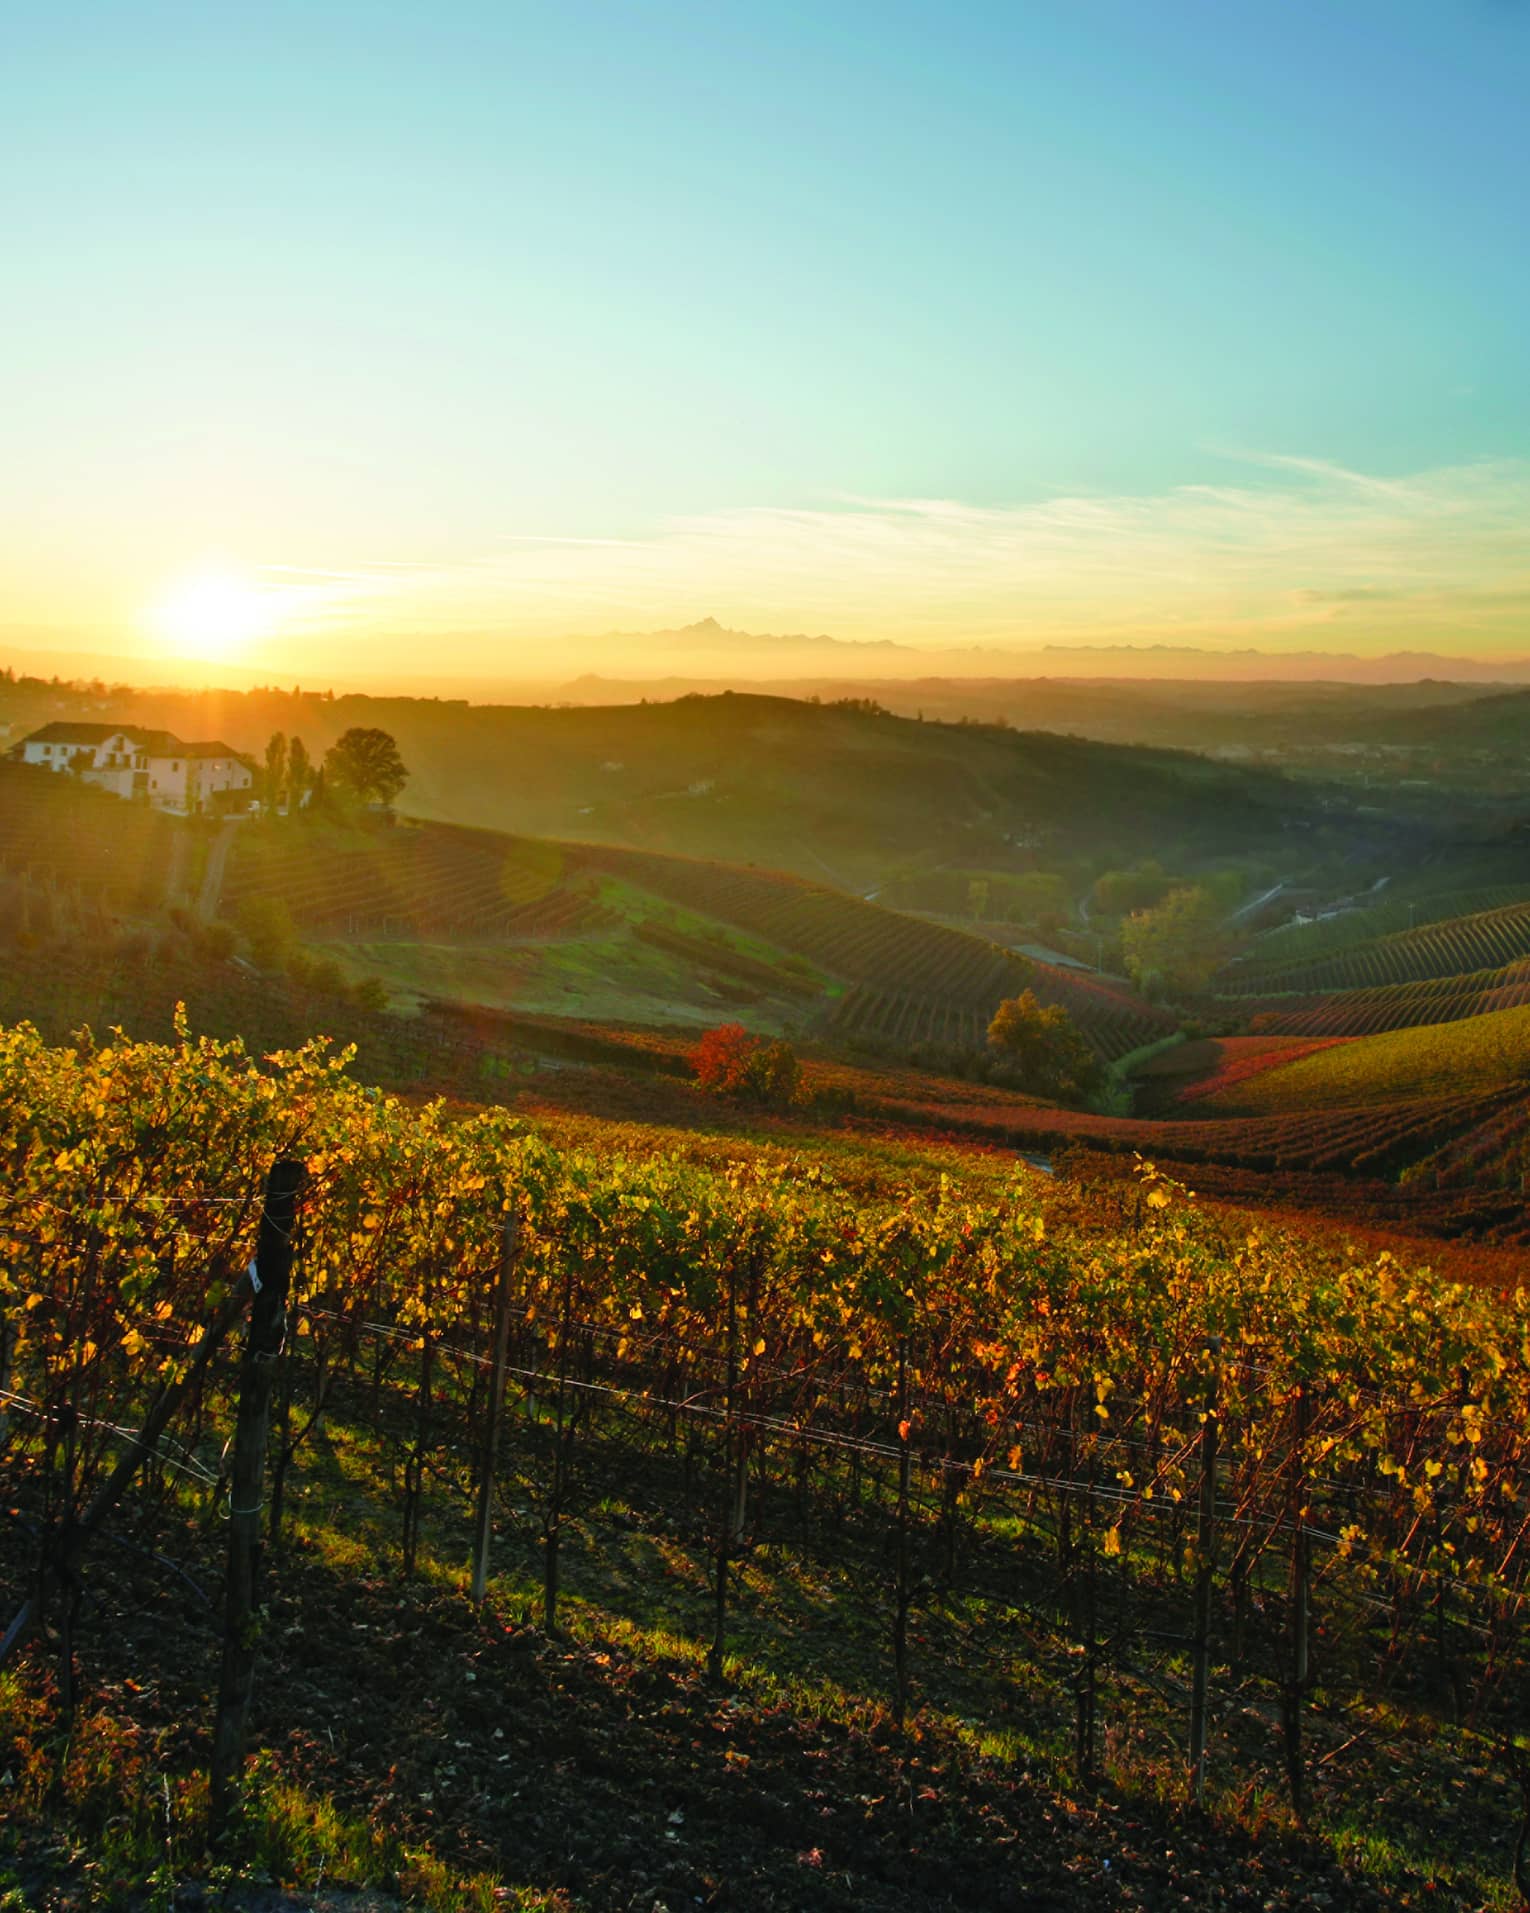 Golden sun over rolling vineyards in Italy 